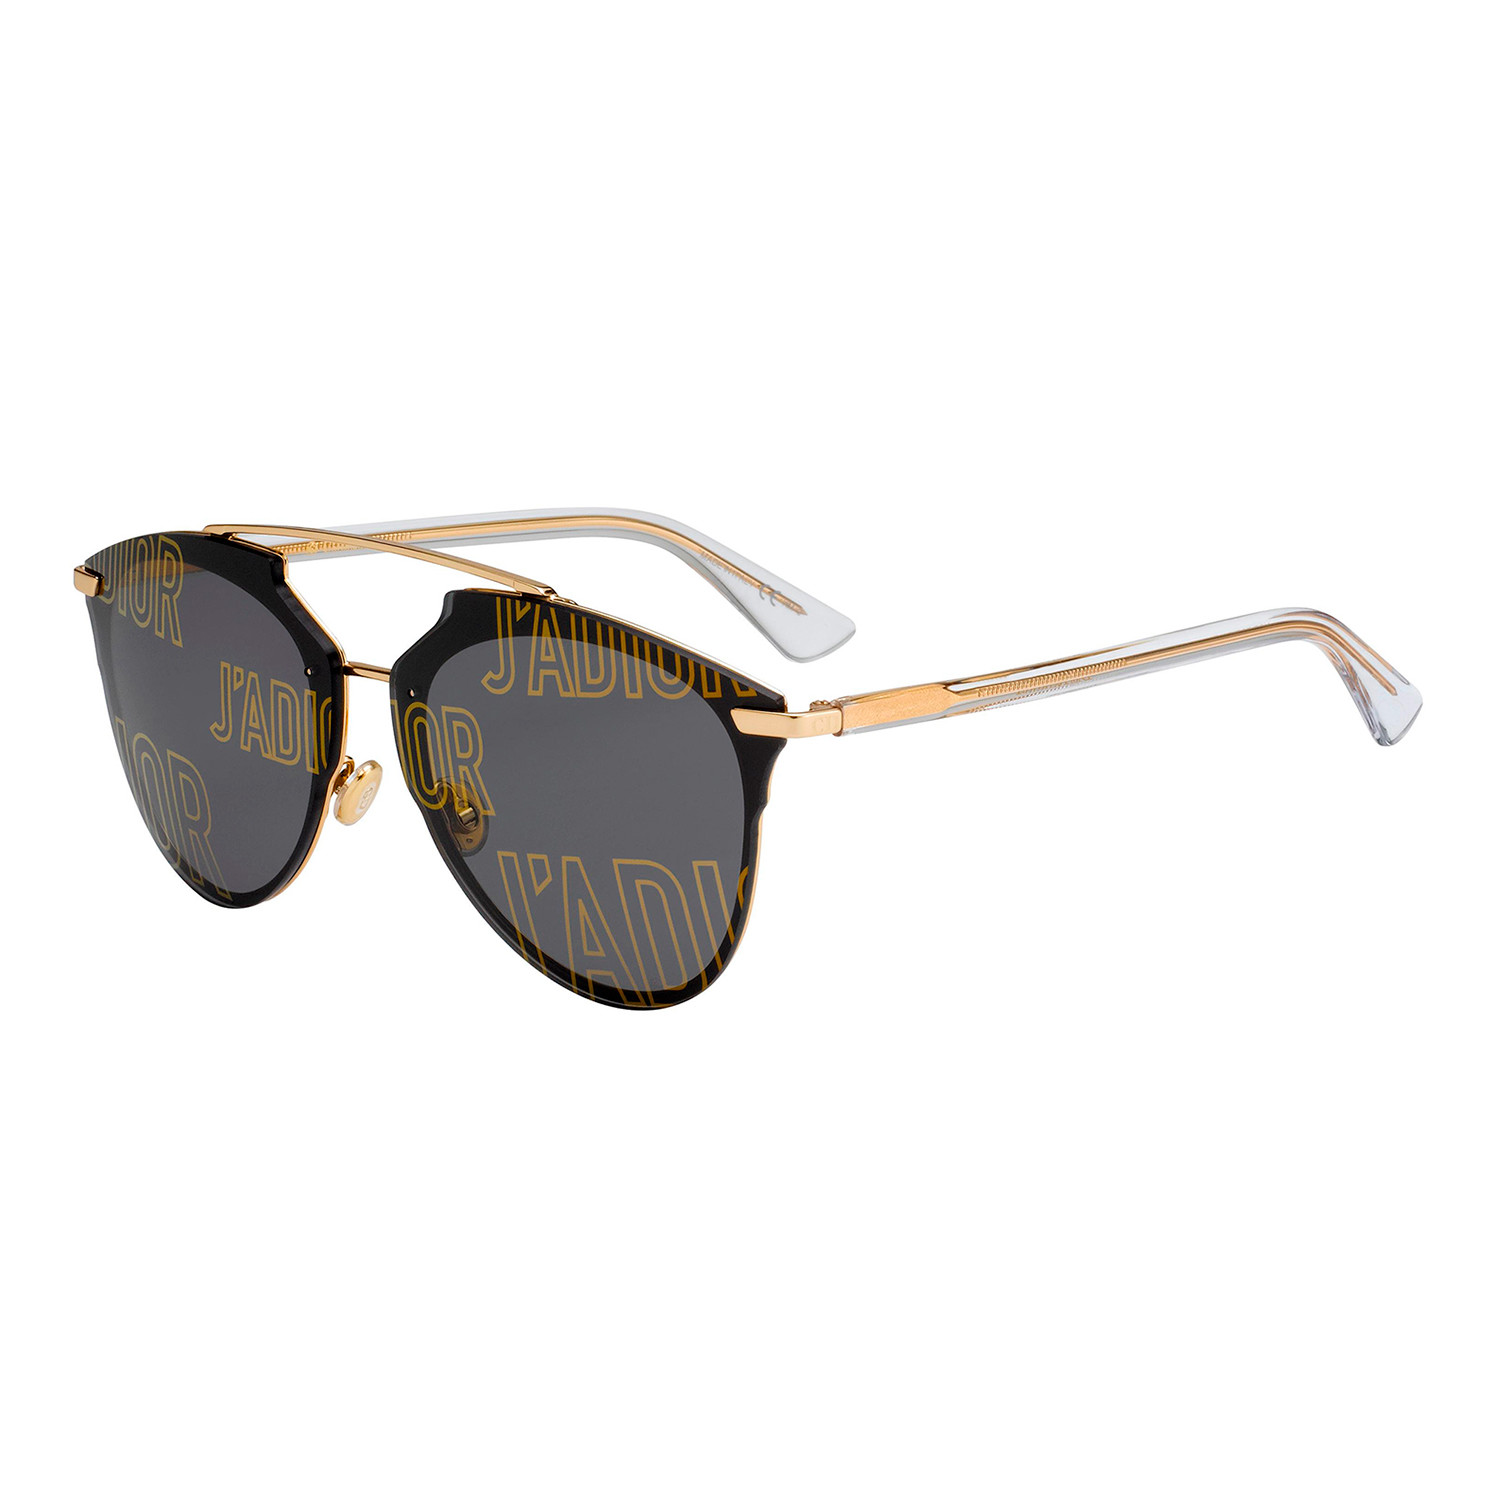 dior sunglasses black and gold